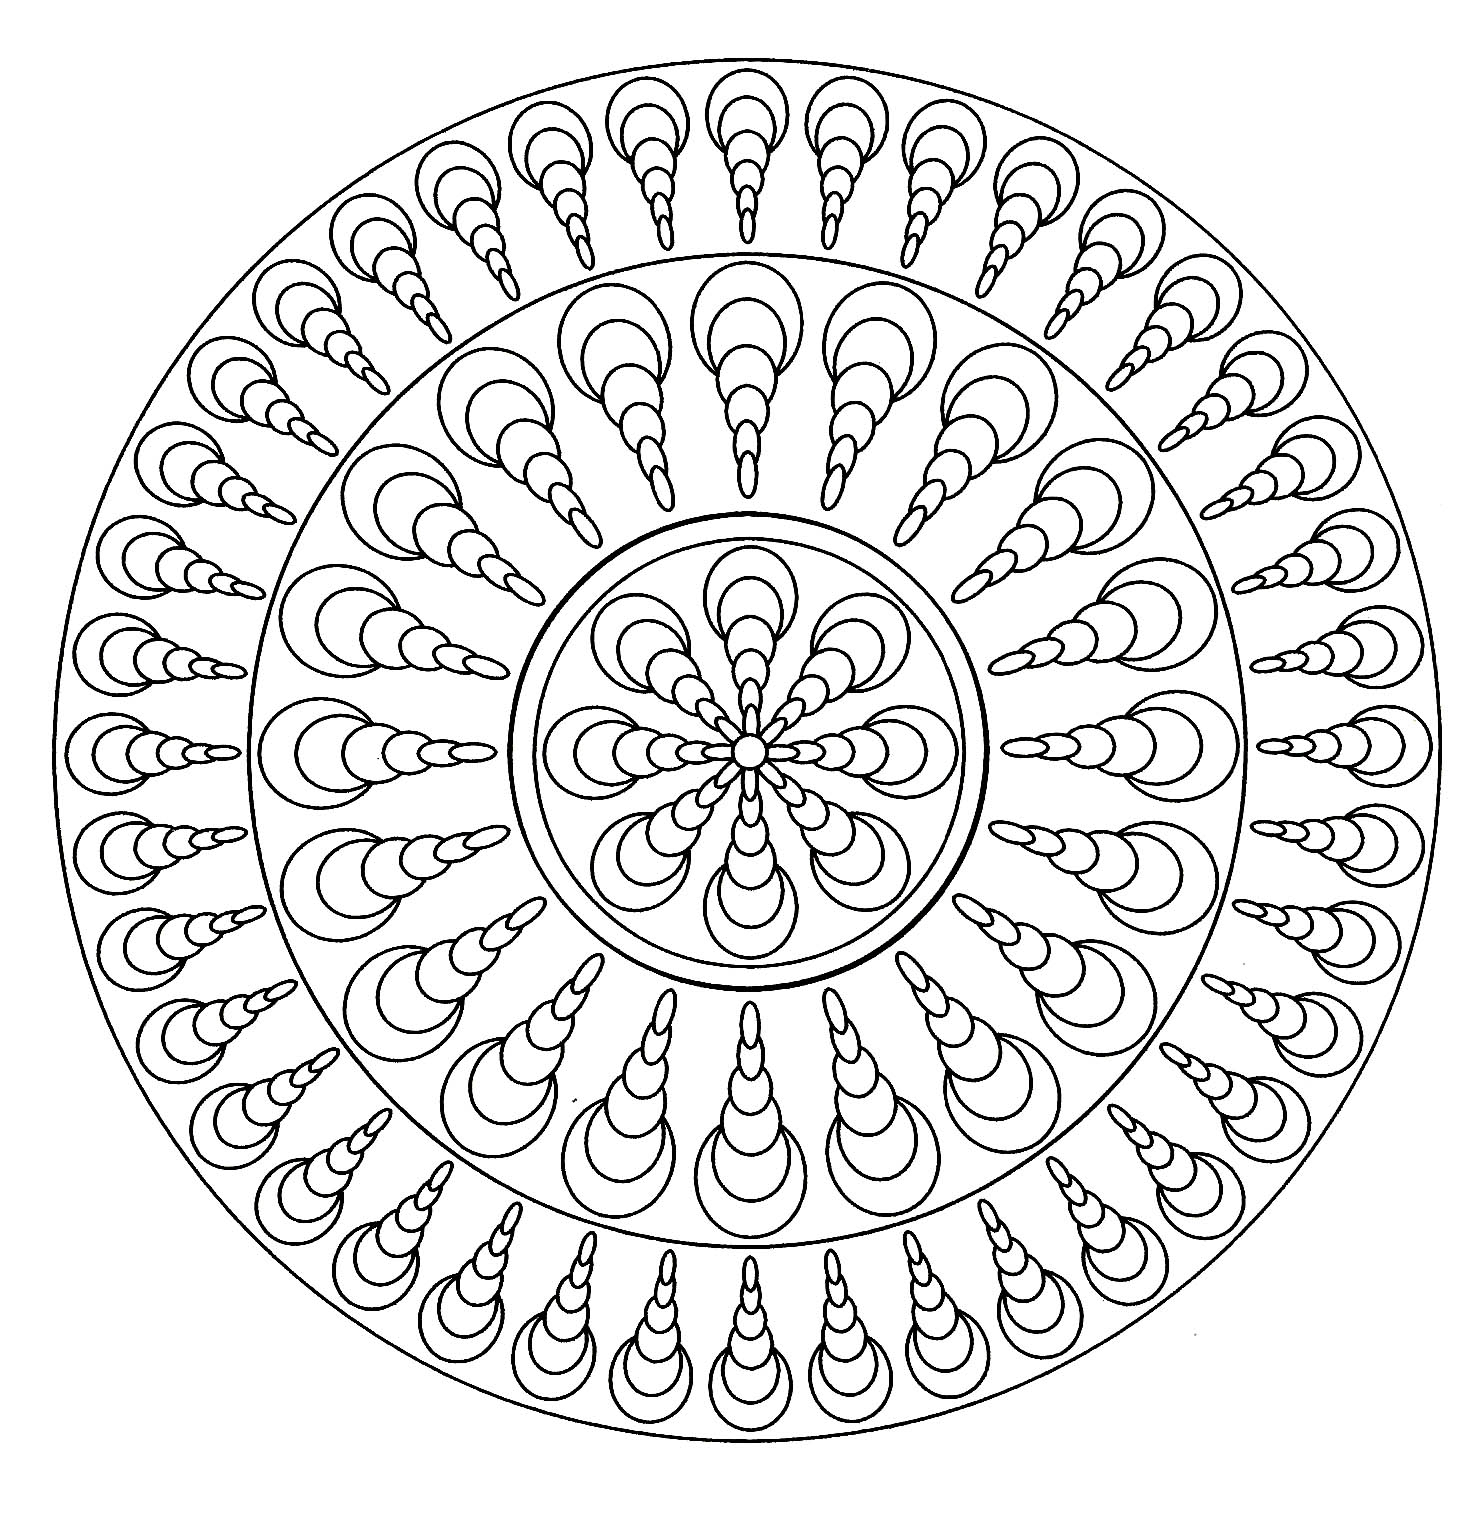 Mandala Facile 4 - Mandalas - Coloriages Difficiles Pour à Coloriage De Mandala Difficile A Imprimer